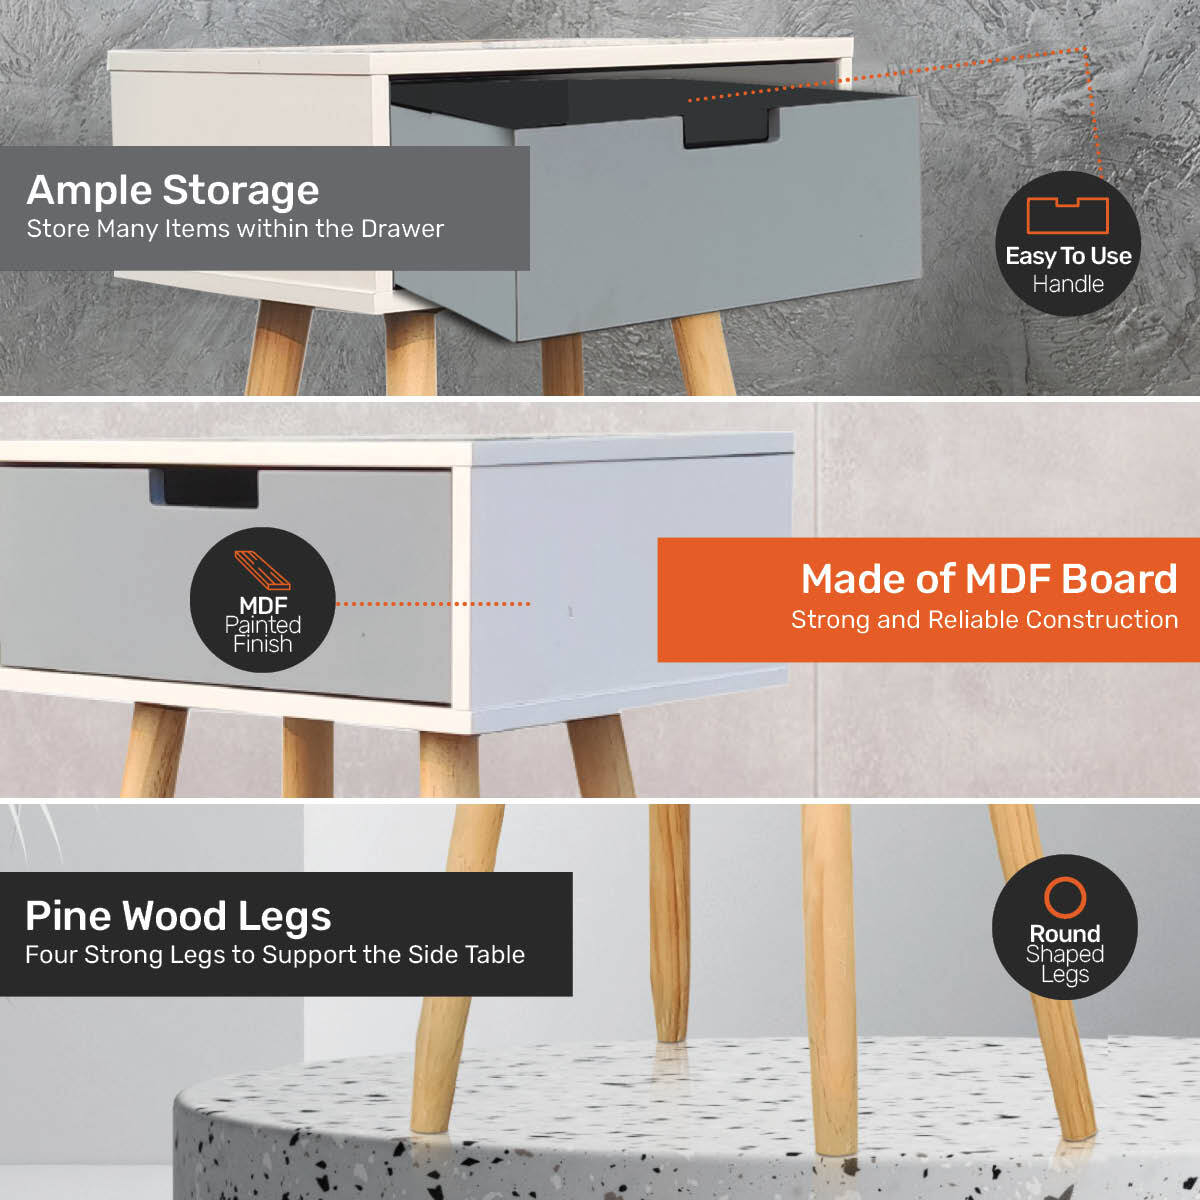 Home Master 1 Drawer Side Table Modern Sleek & Stylish Neutral Design 61cm Deals499